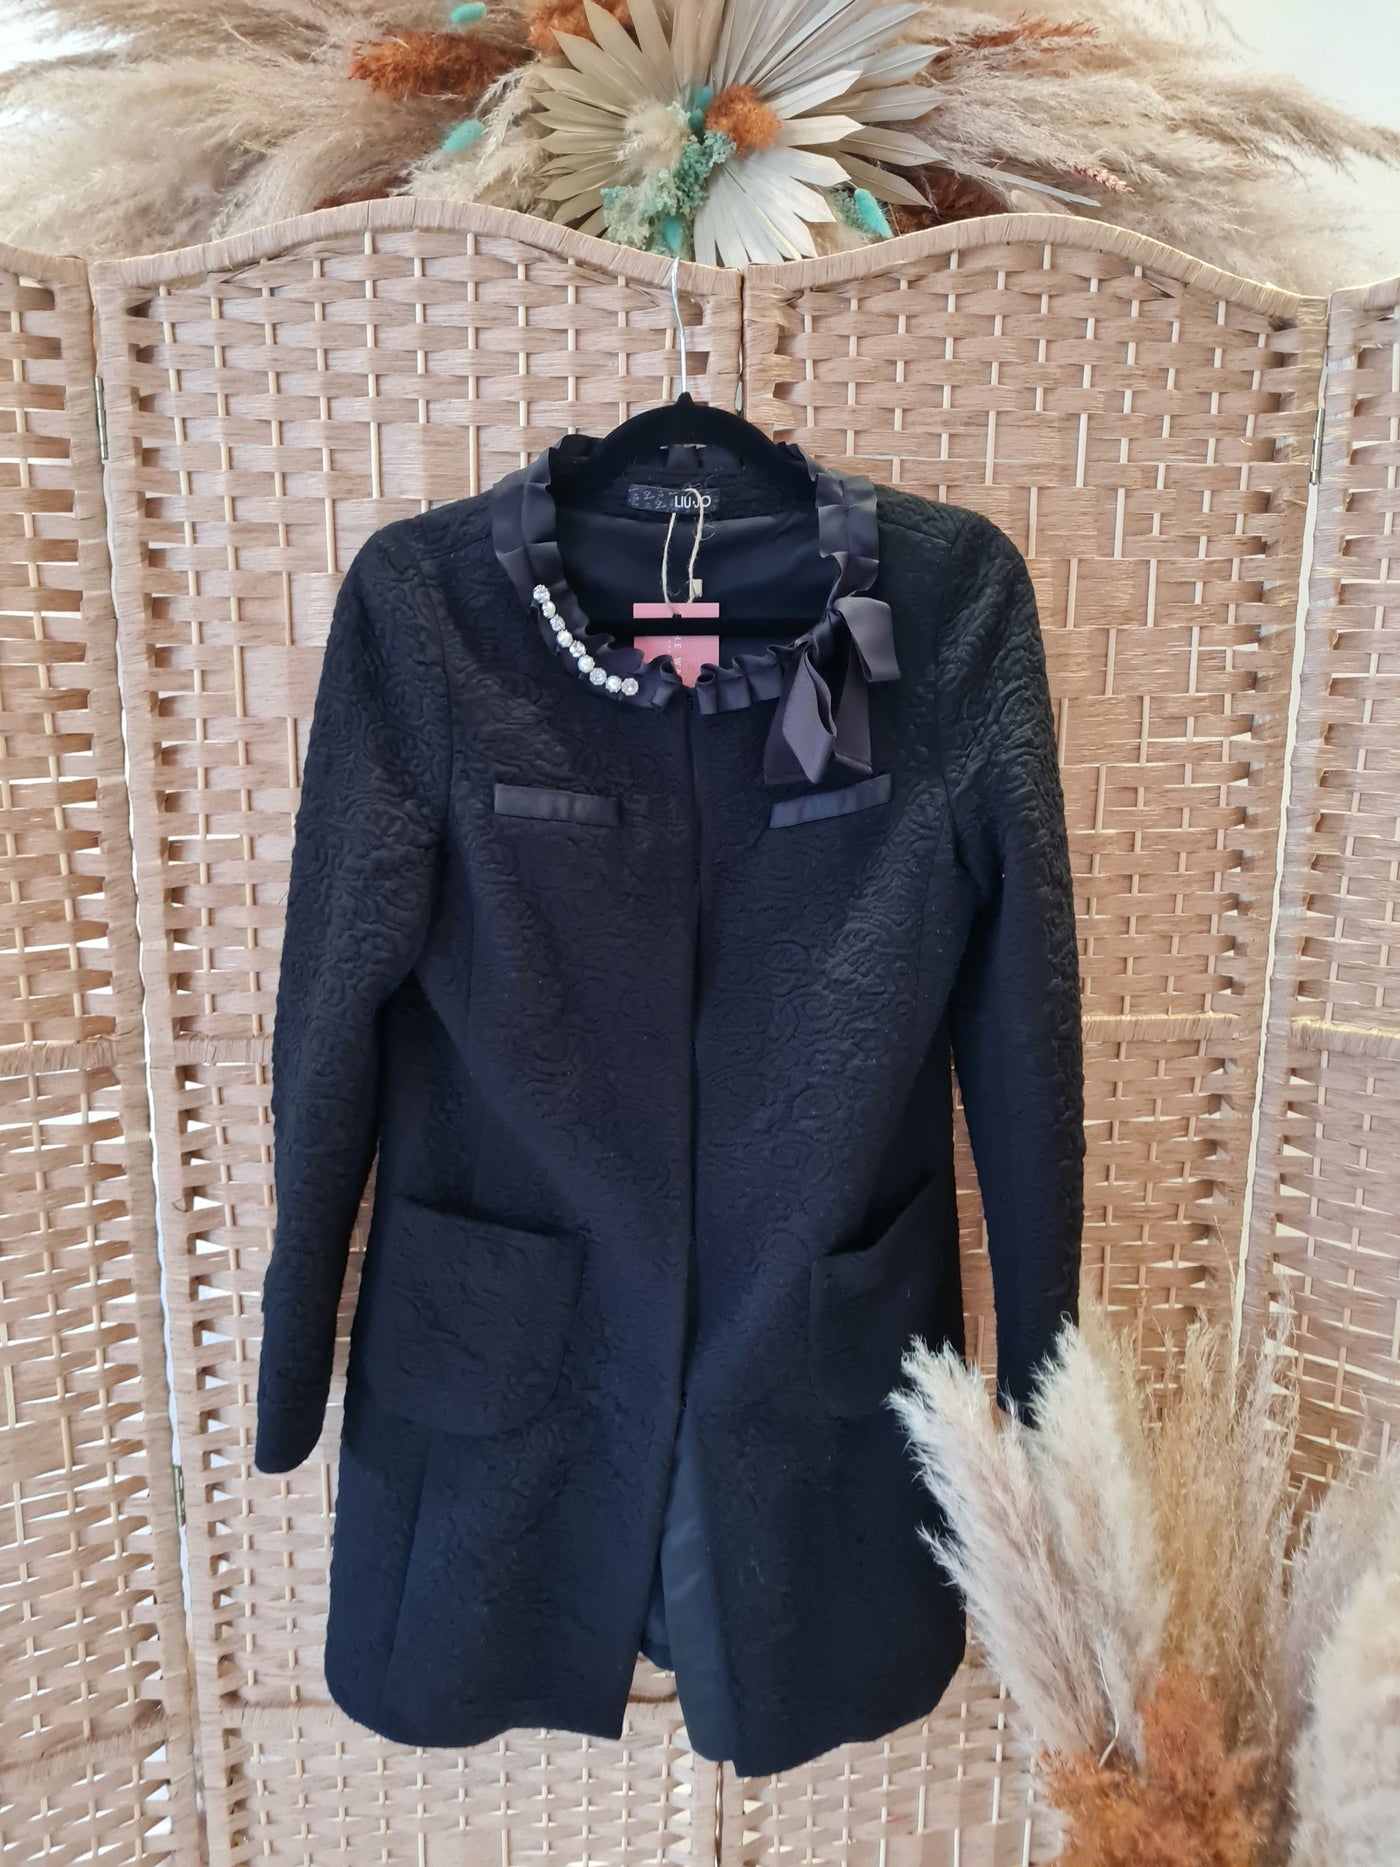 Liu Jo  Black Coat Size 10